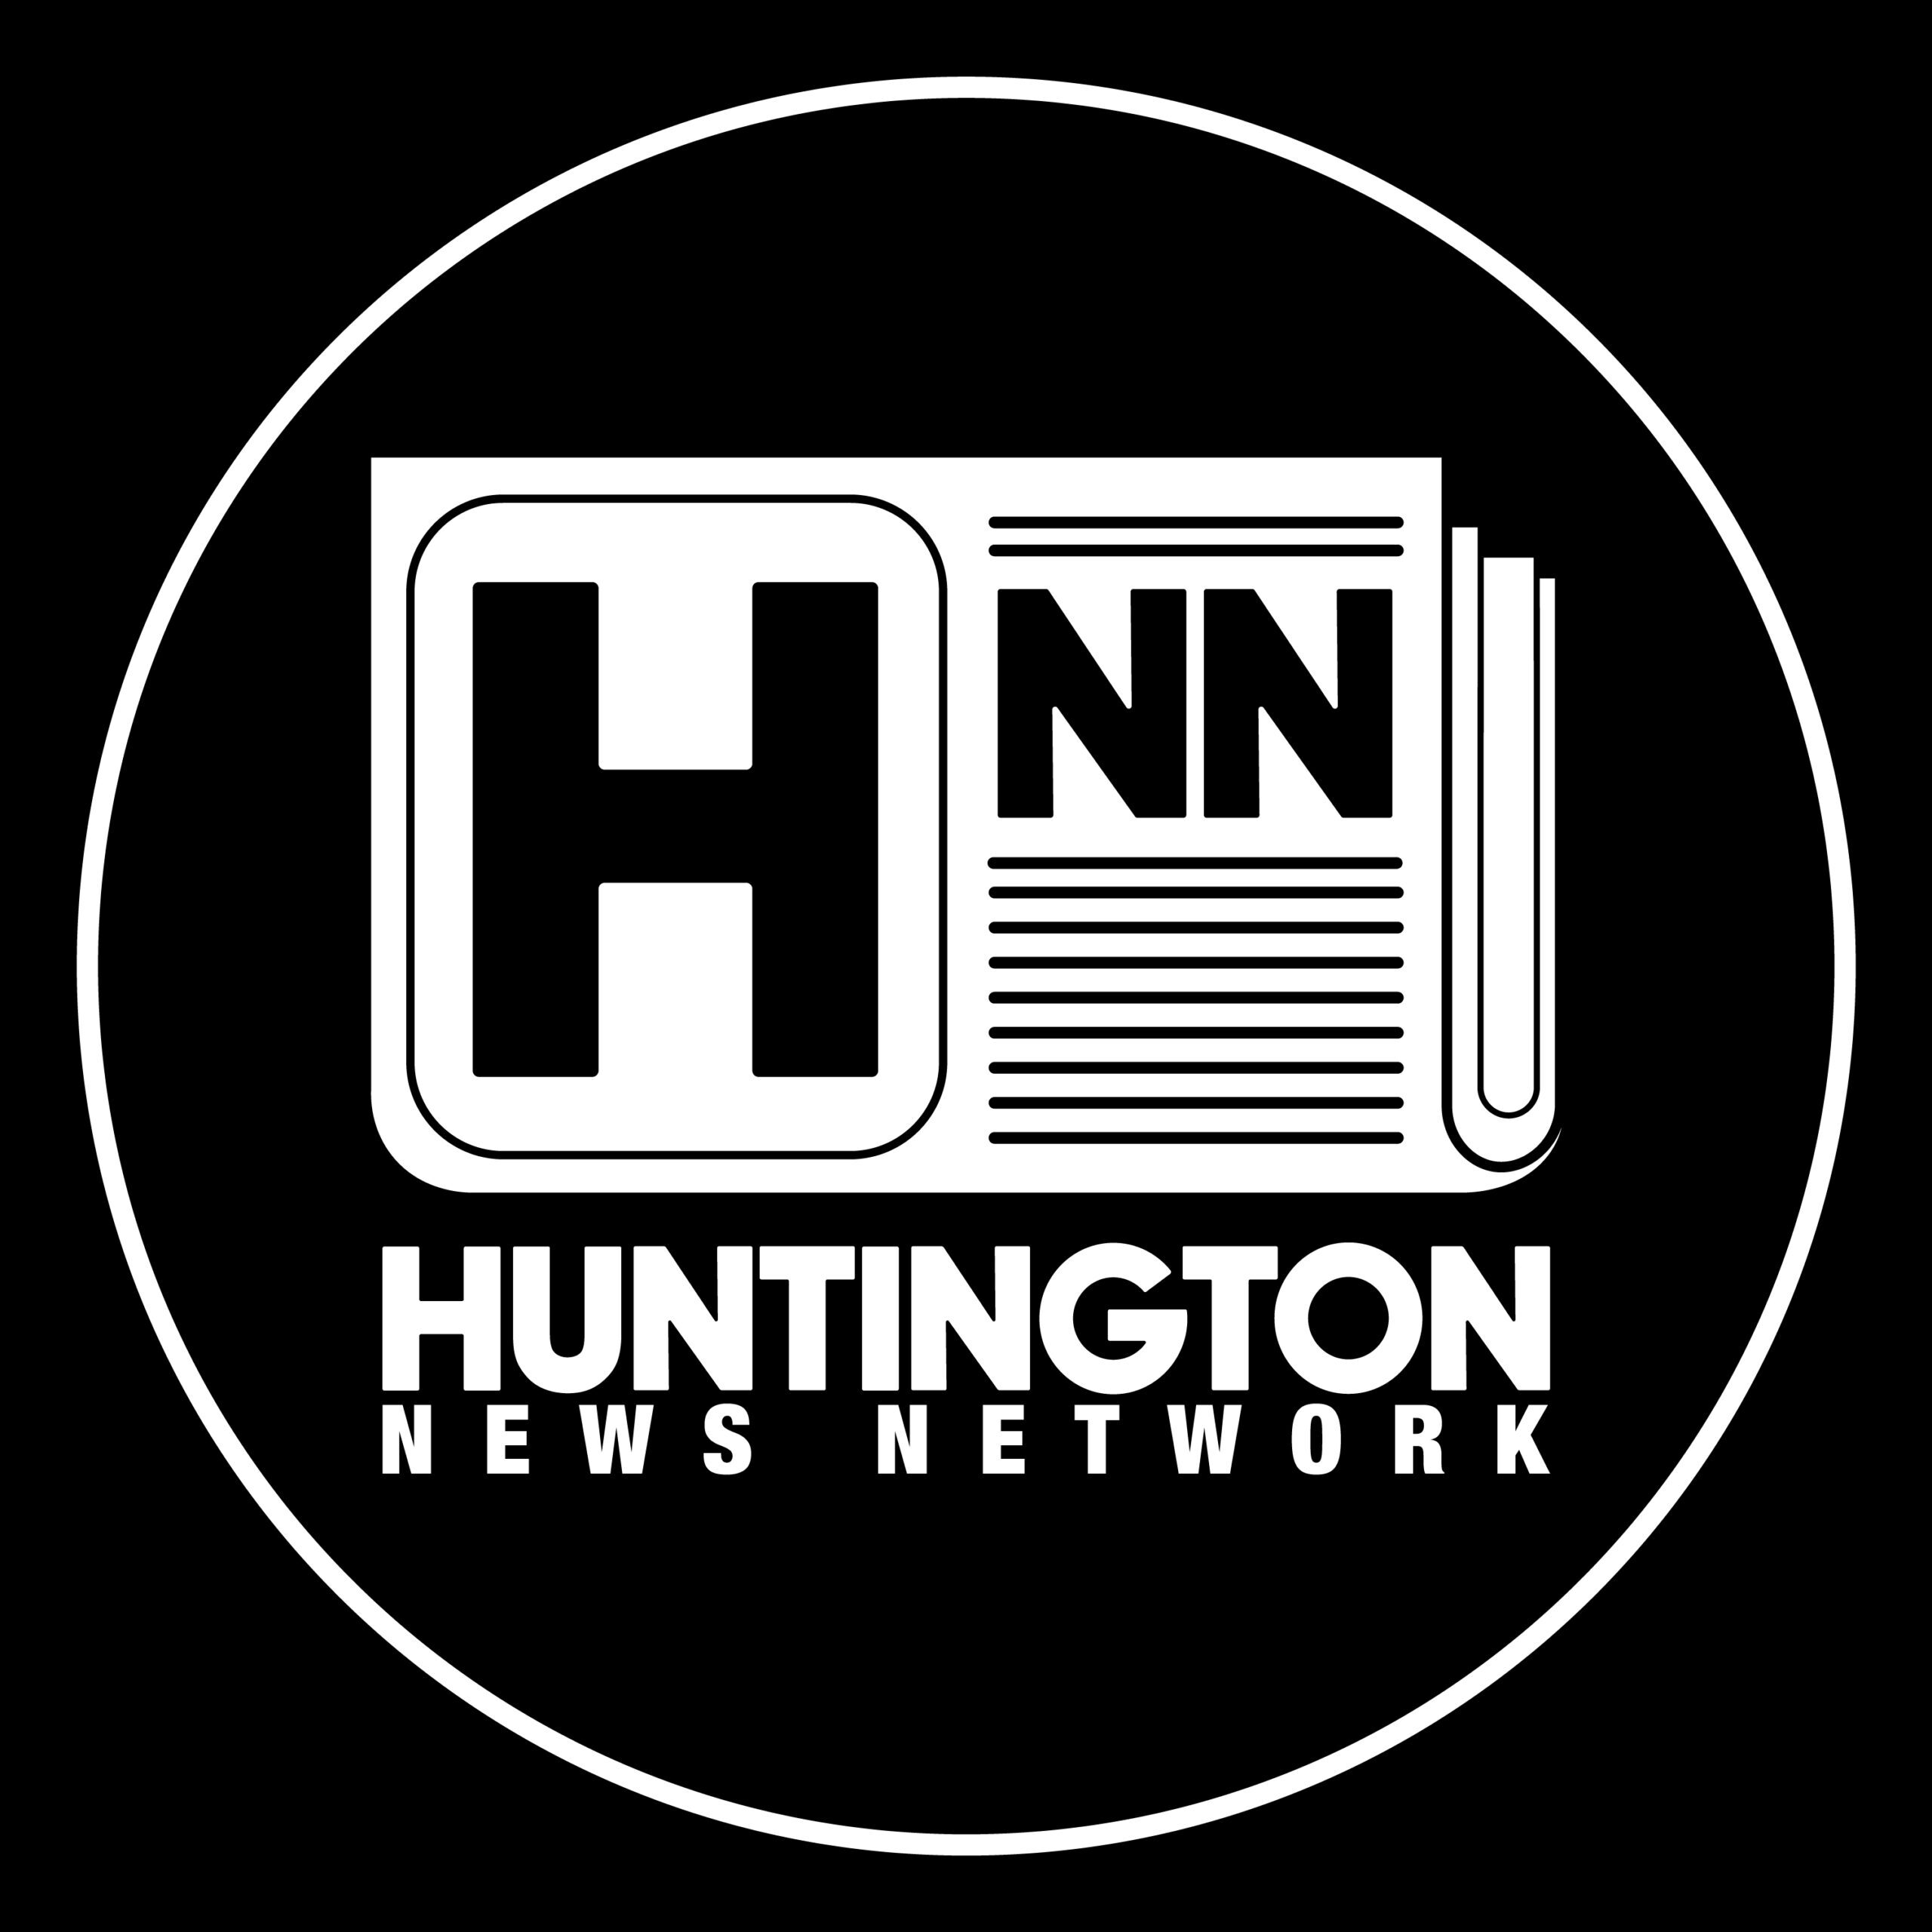 HNN HUNTINGTON NEWS NETWORK WEST VIRGINIA